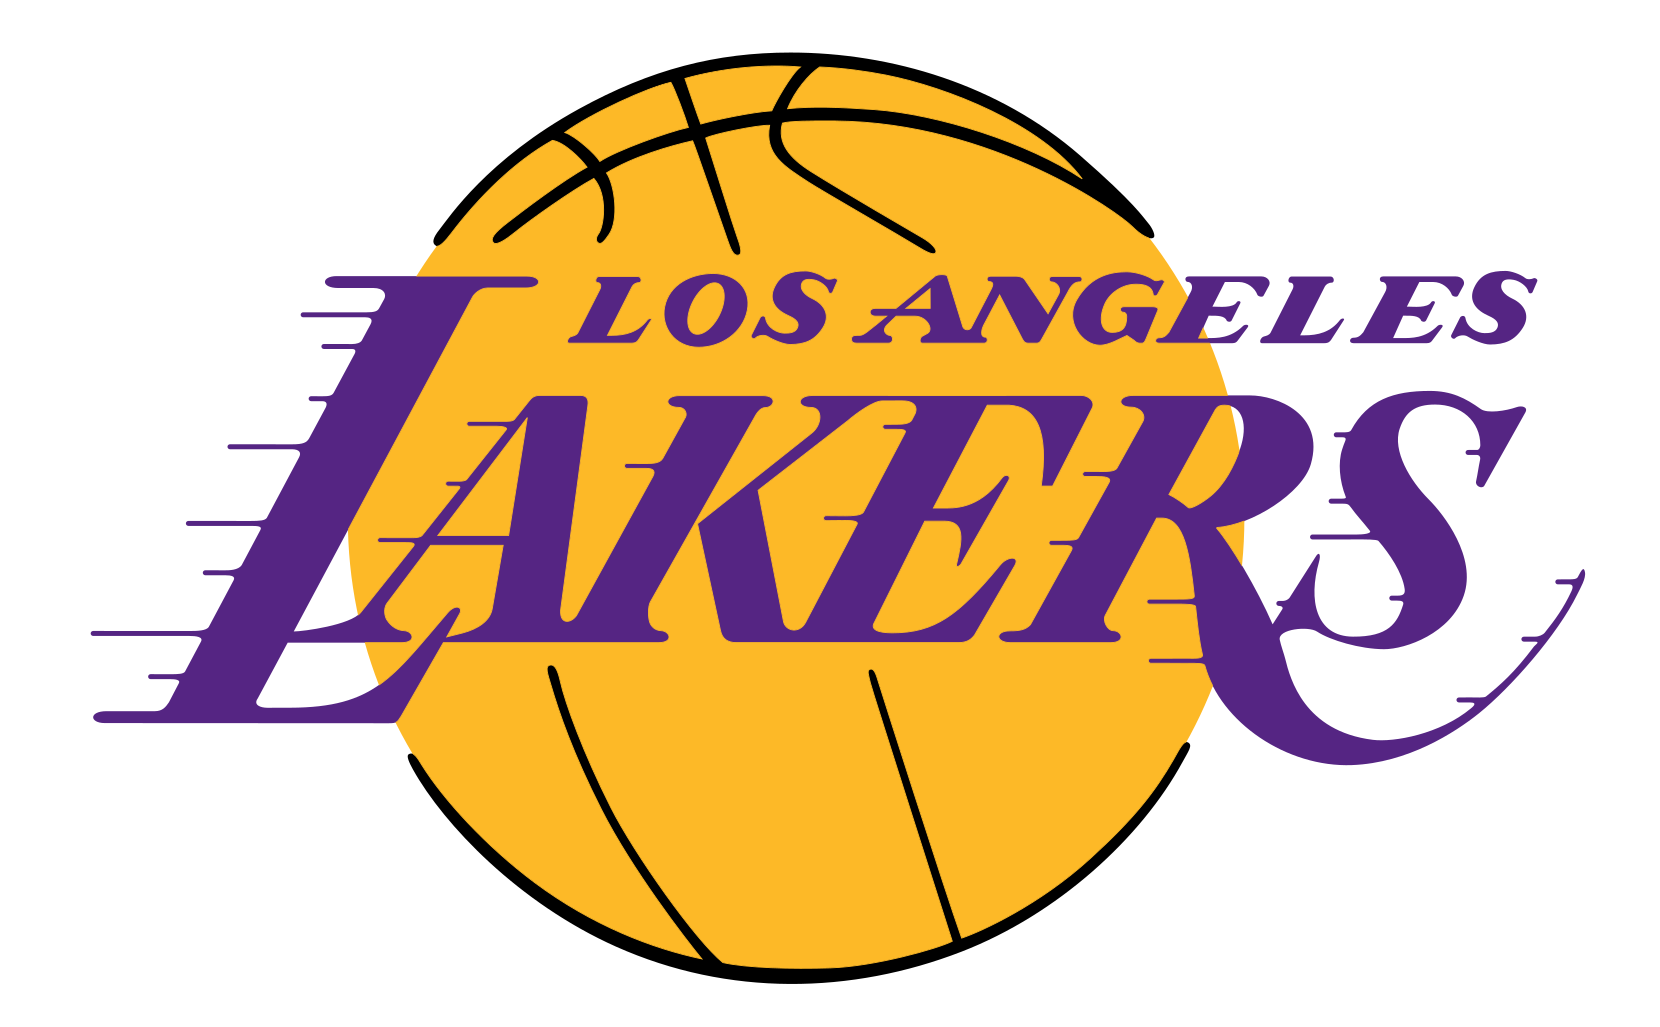 los angeles lakers logo 2 - Los Angeles Lakers Logo